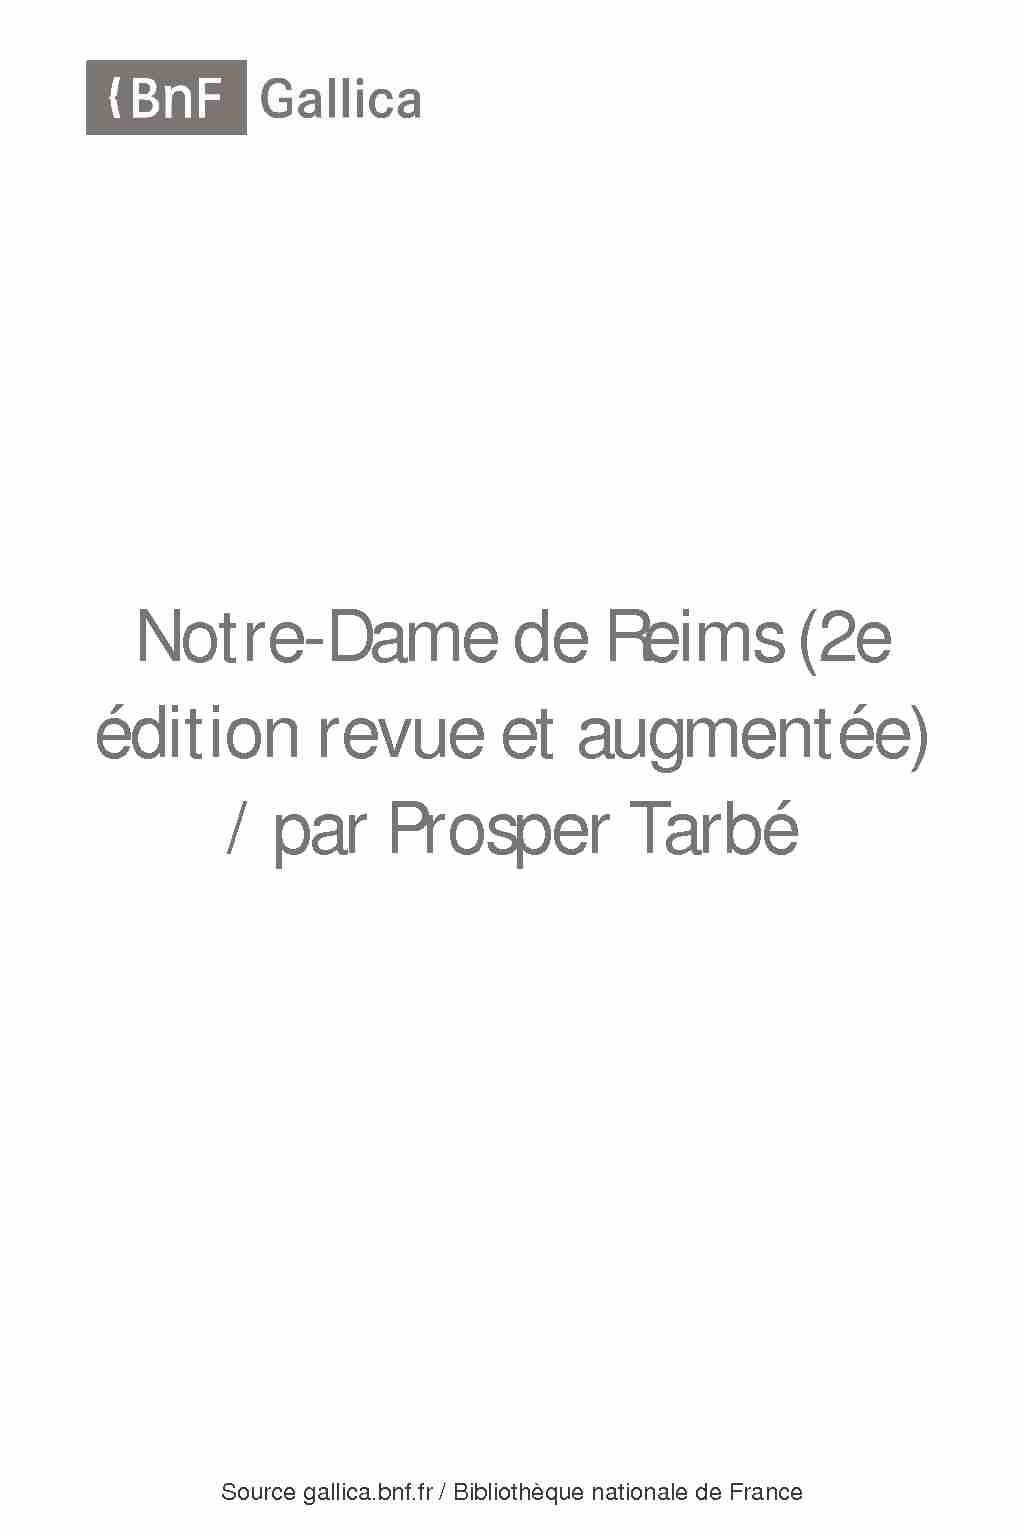 [PDF] Notre-Dame de Reims - Gallica - BnF